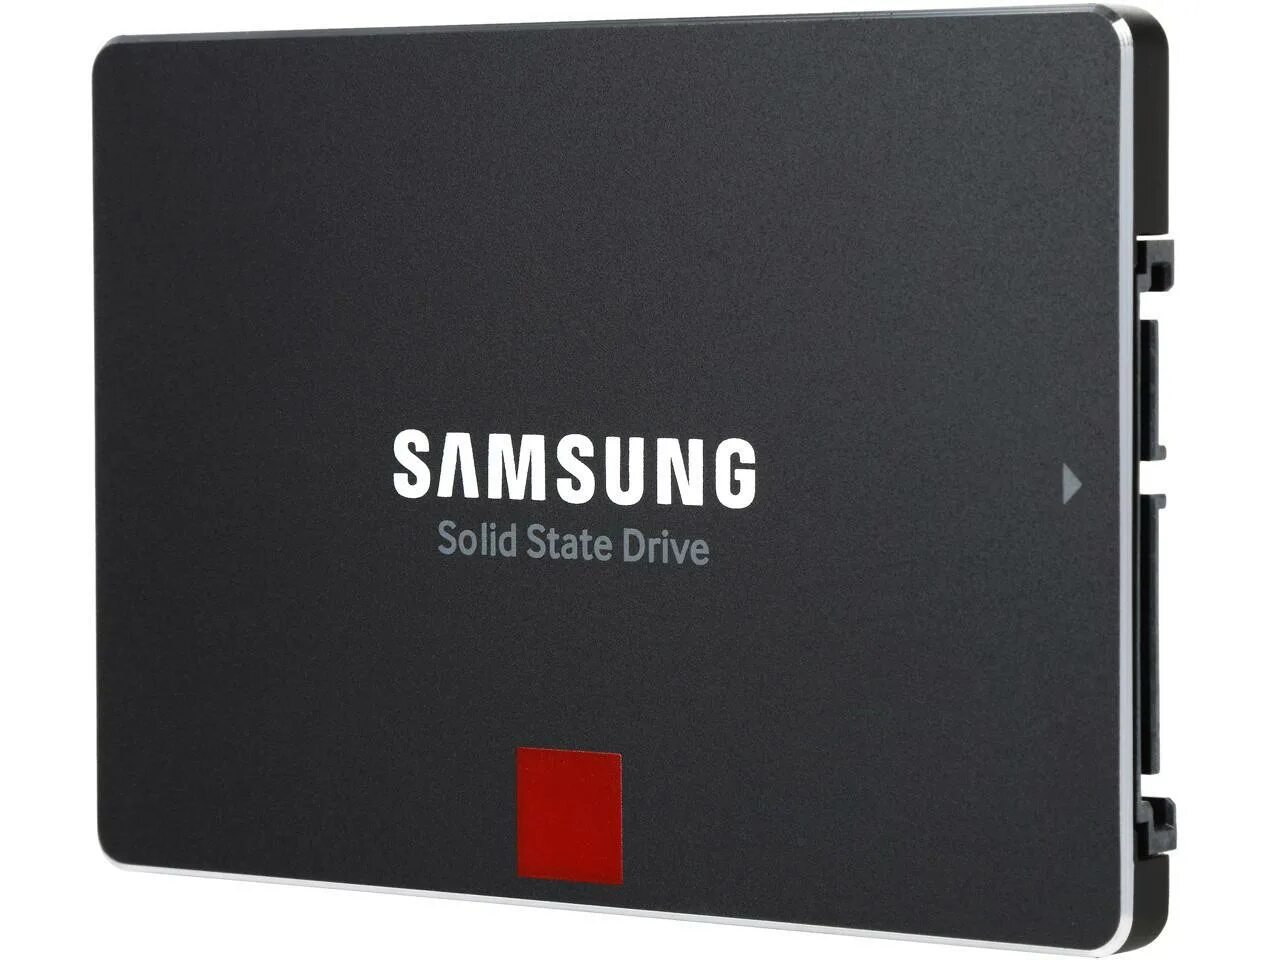 Samsung 850 Pro 2tb. SSD Samsung 850 Pro 256gb. Samsung SSD 850/860, 256/512/1024 GB. Samsung 850 Pro SATA MZ-7ke256bw.